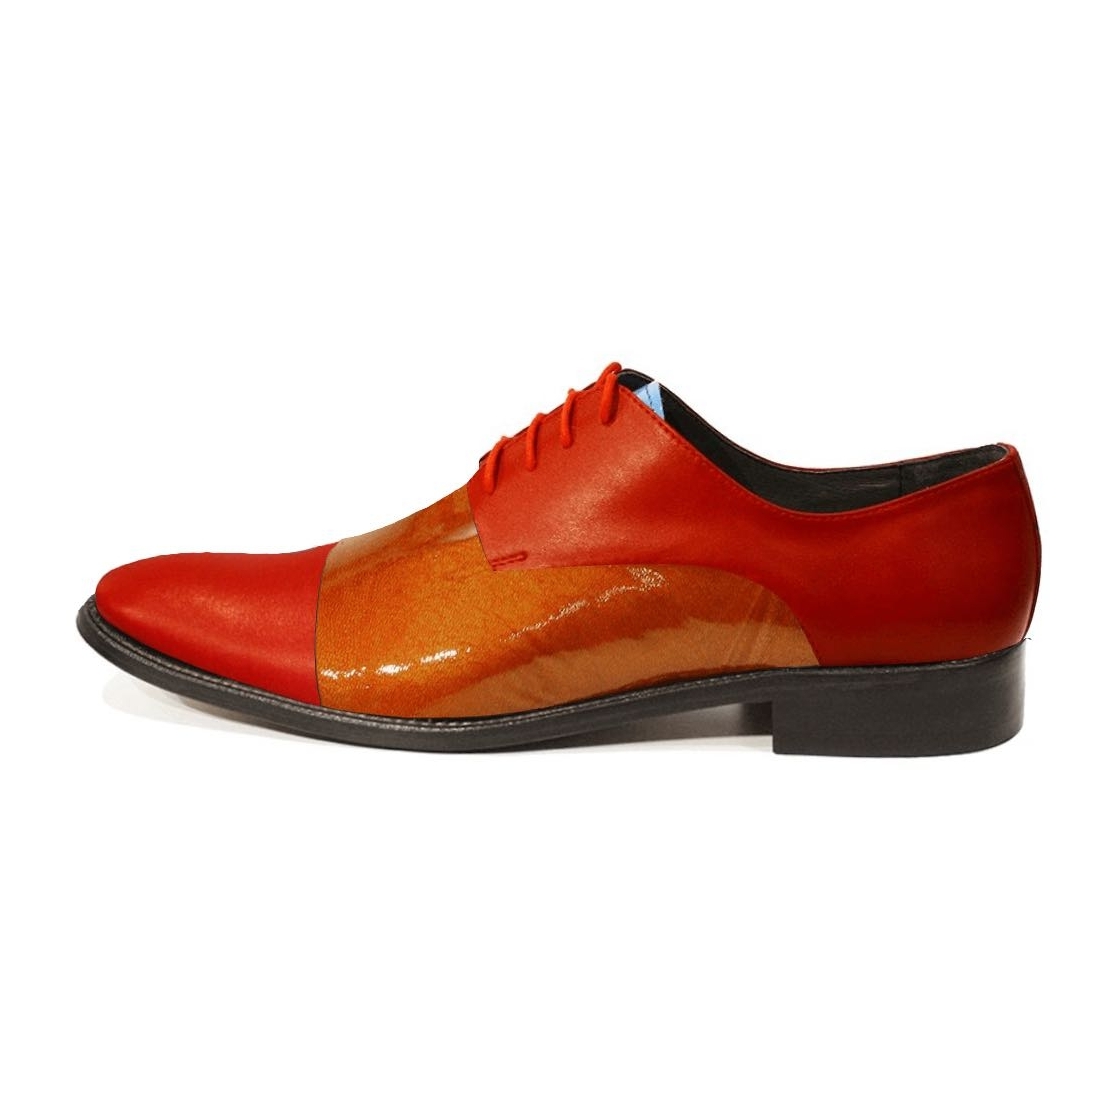 Modello Teterro - Classic Shoes - Handmade Colorful Italian Leather Shoes